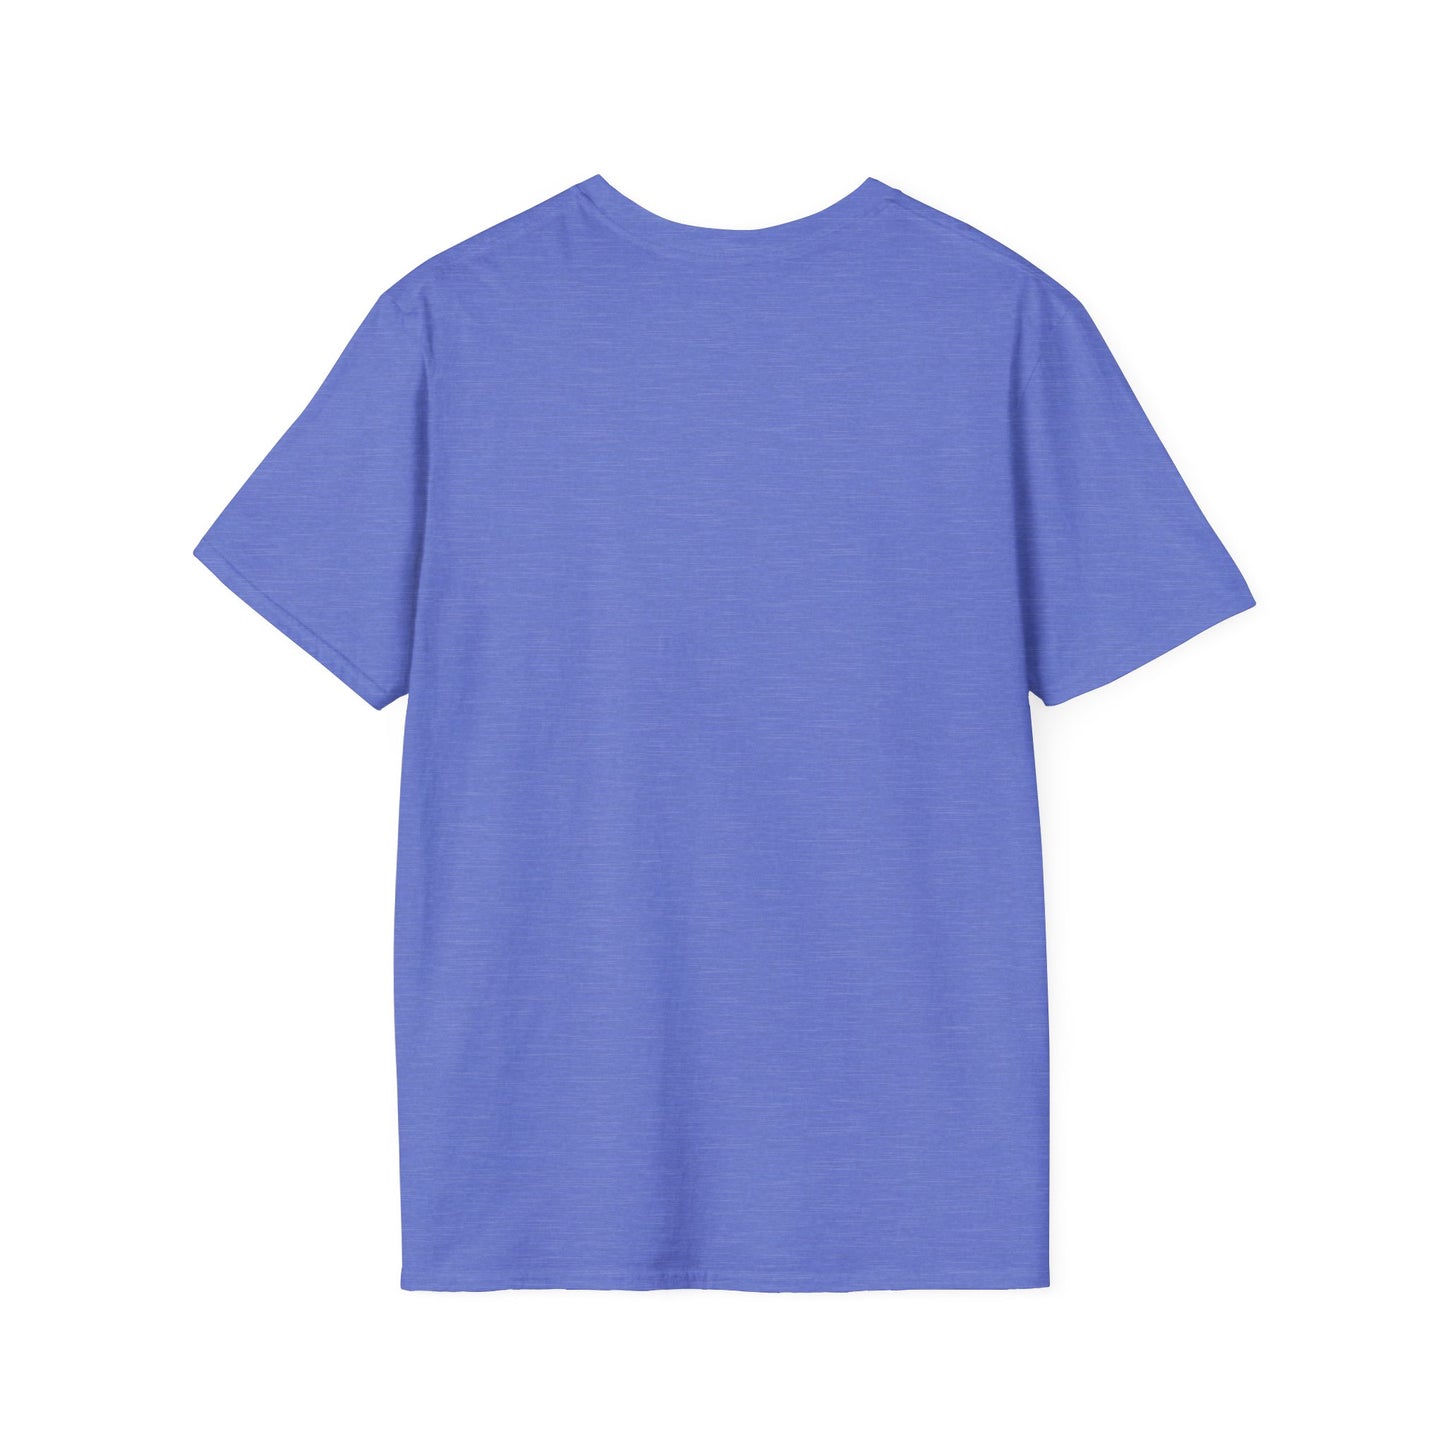 New Story Unisex Softstyle T-Shirt